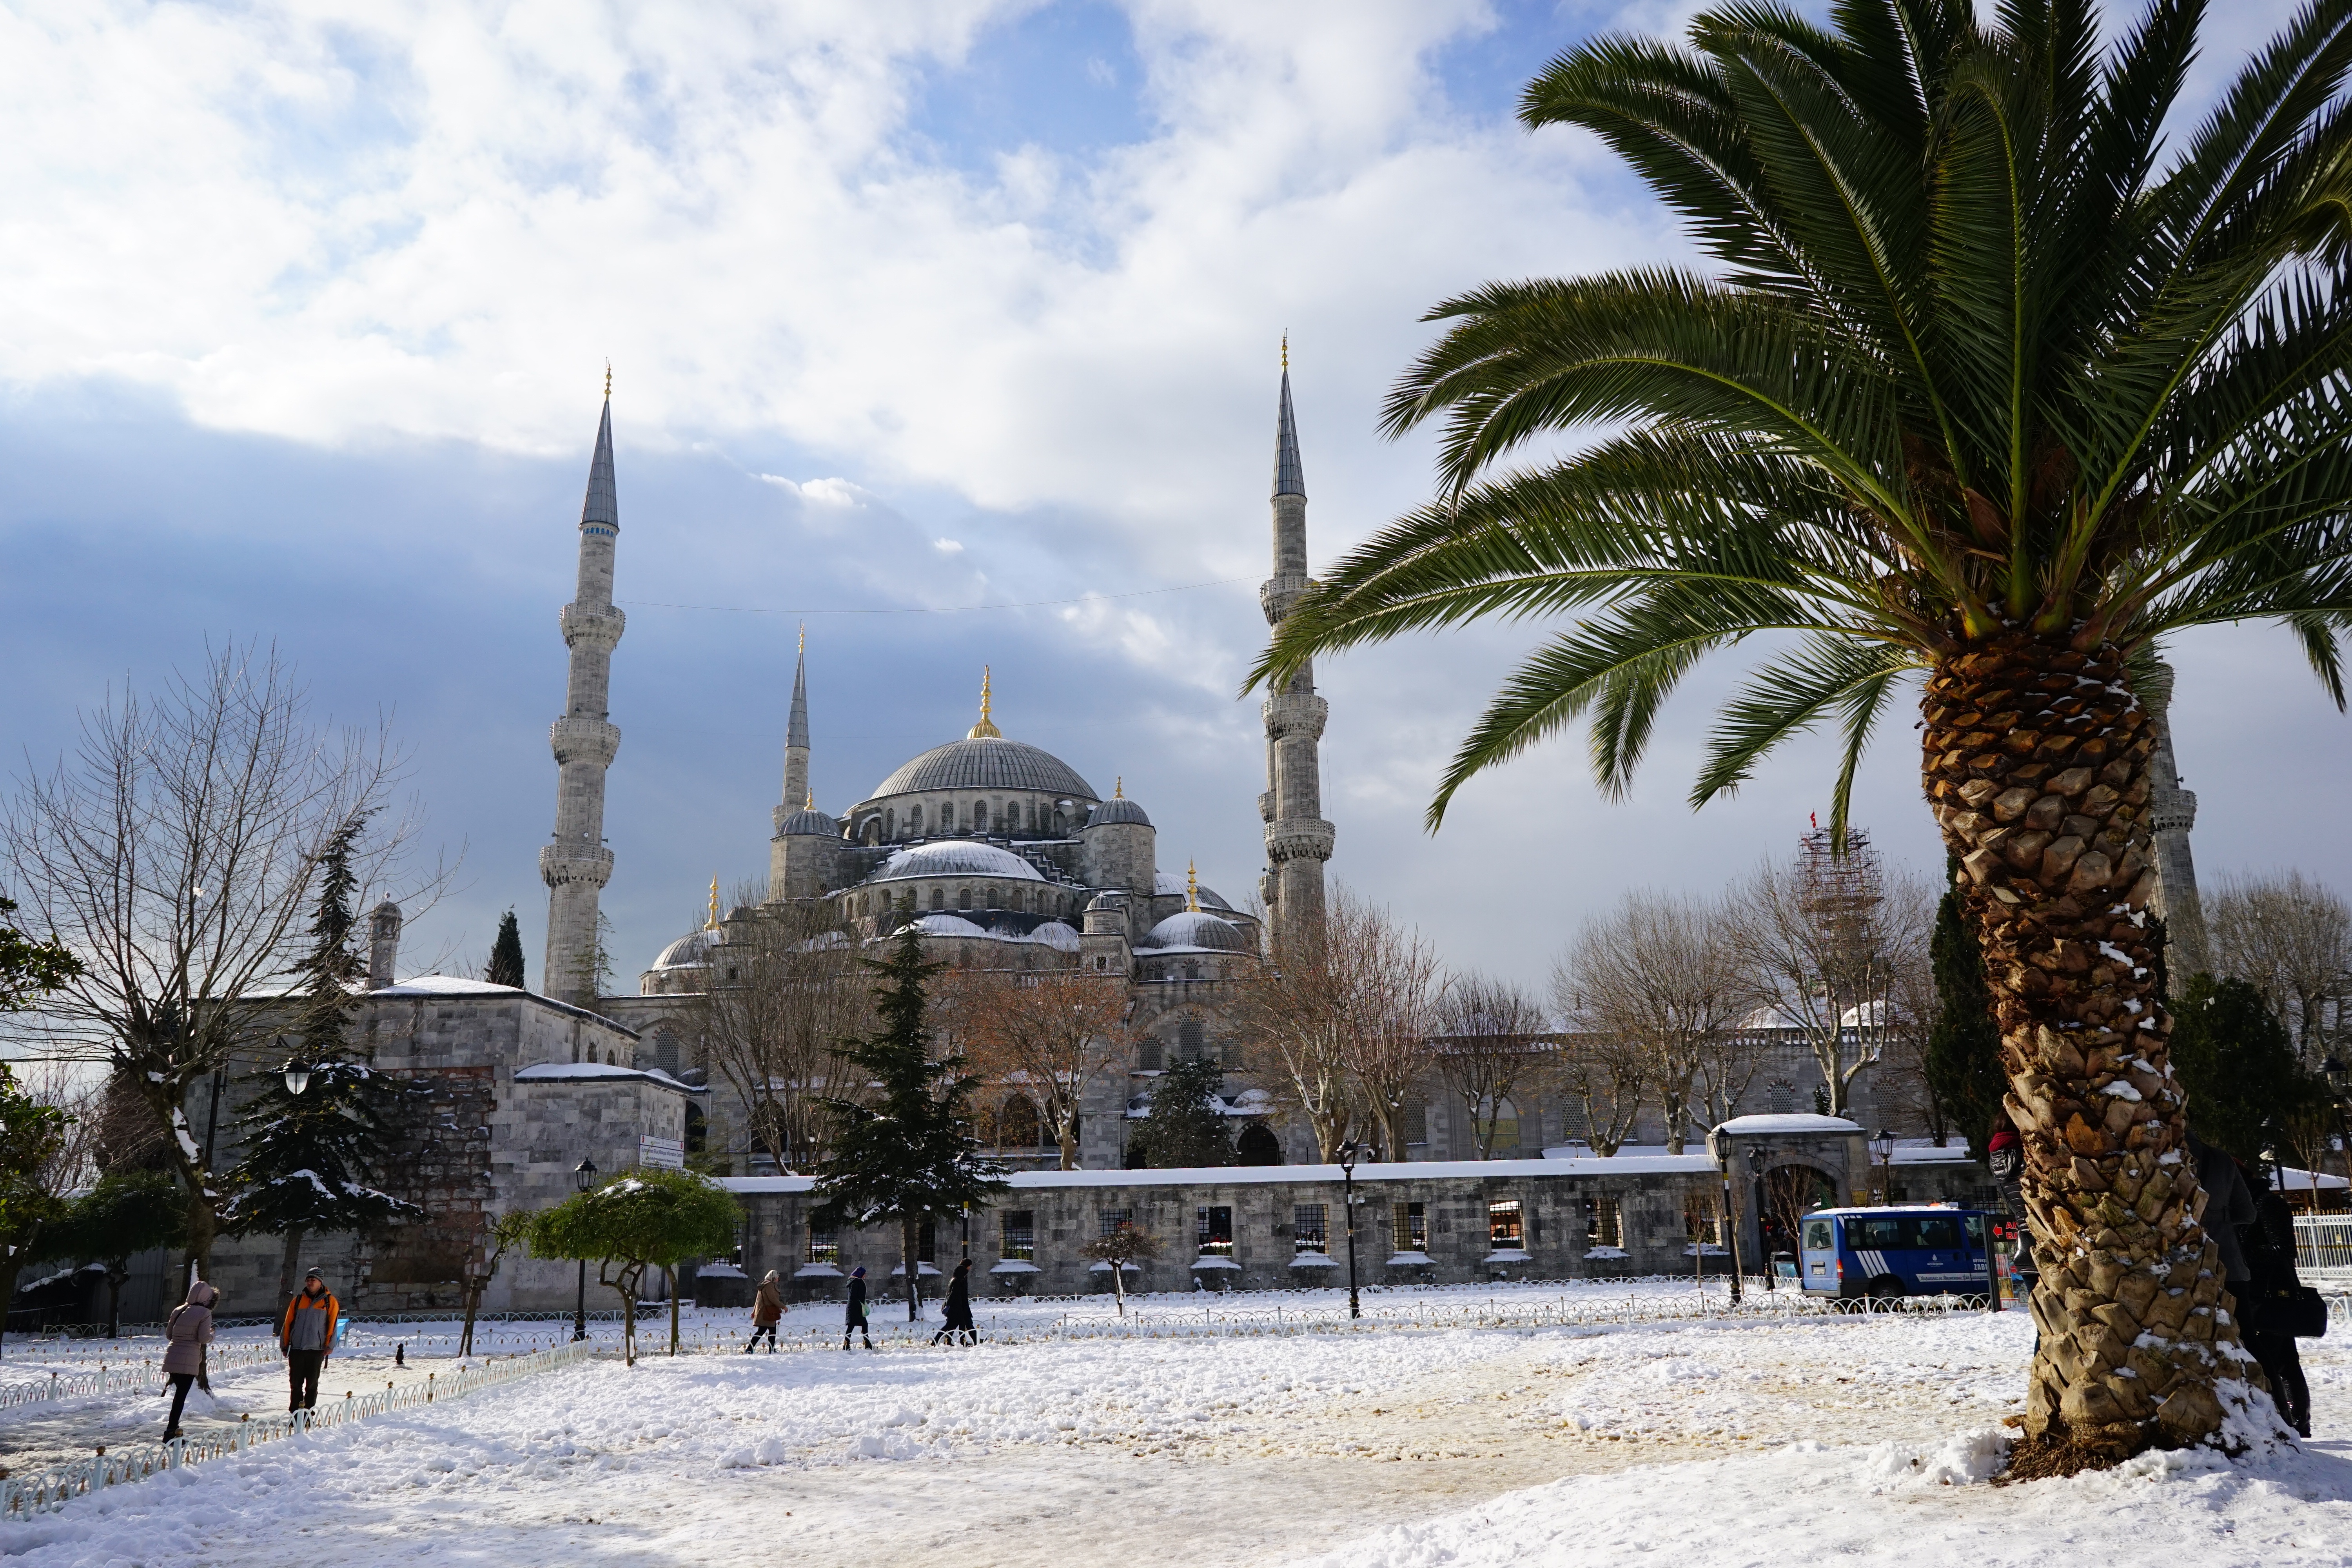 Погода в стамбуле в июле. Турция Султанахмет зима. Мечеть Султанахмет зима. Голубая мечеть в Стамбуле зимой. Истамбул город в Турции зима.